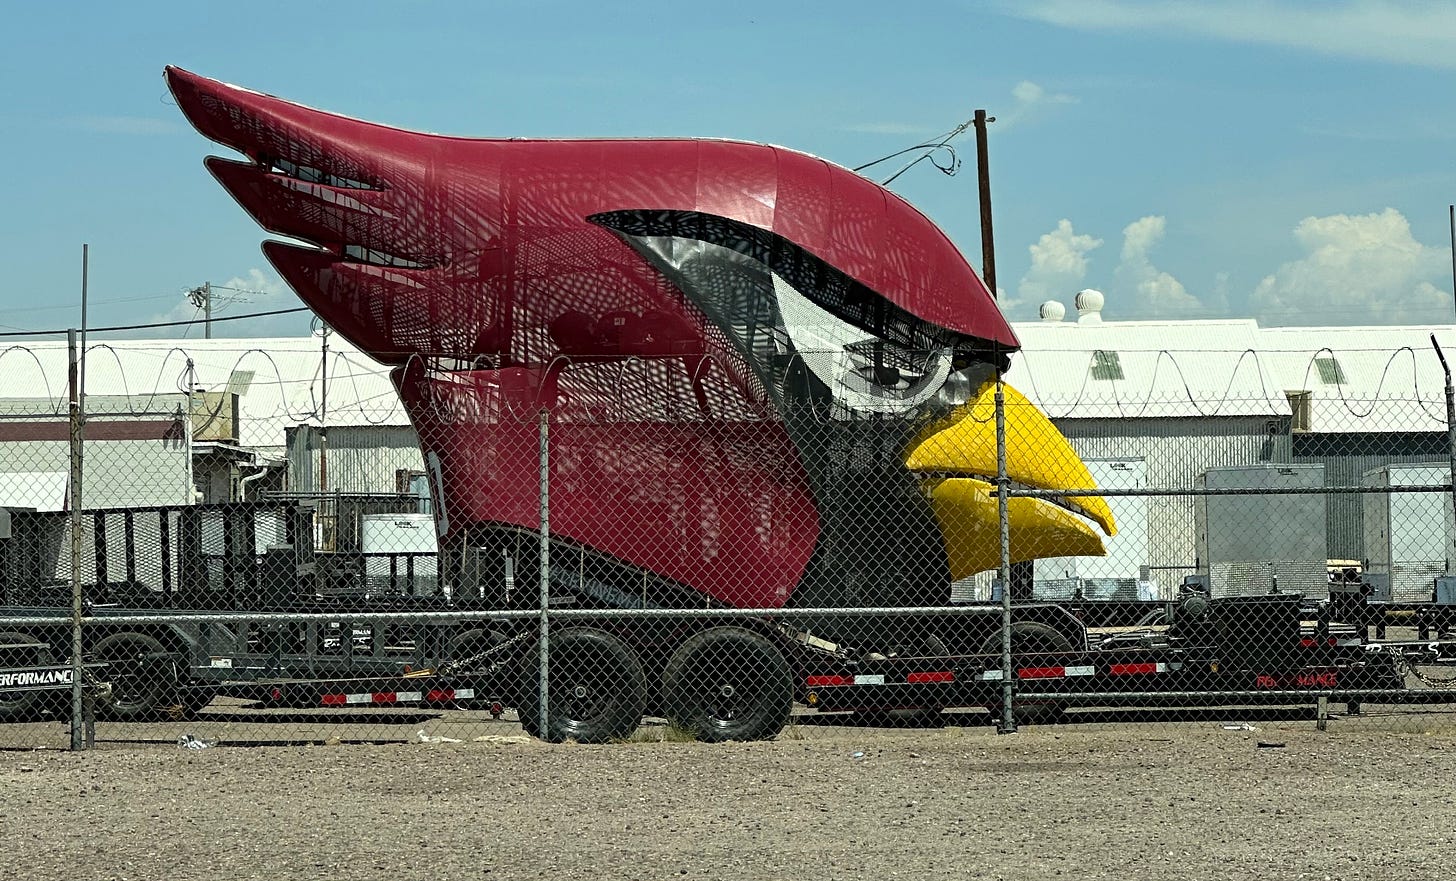 Big freaky Arizona Cardinals mascot head on a trailer.